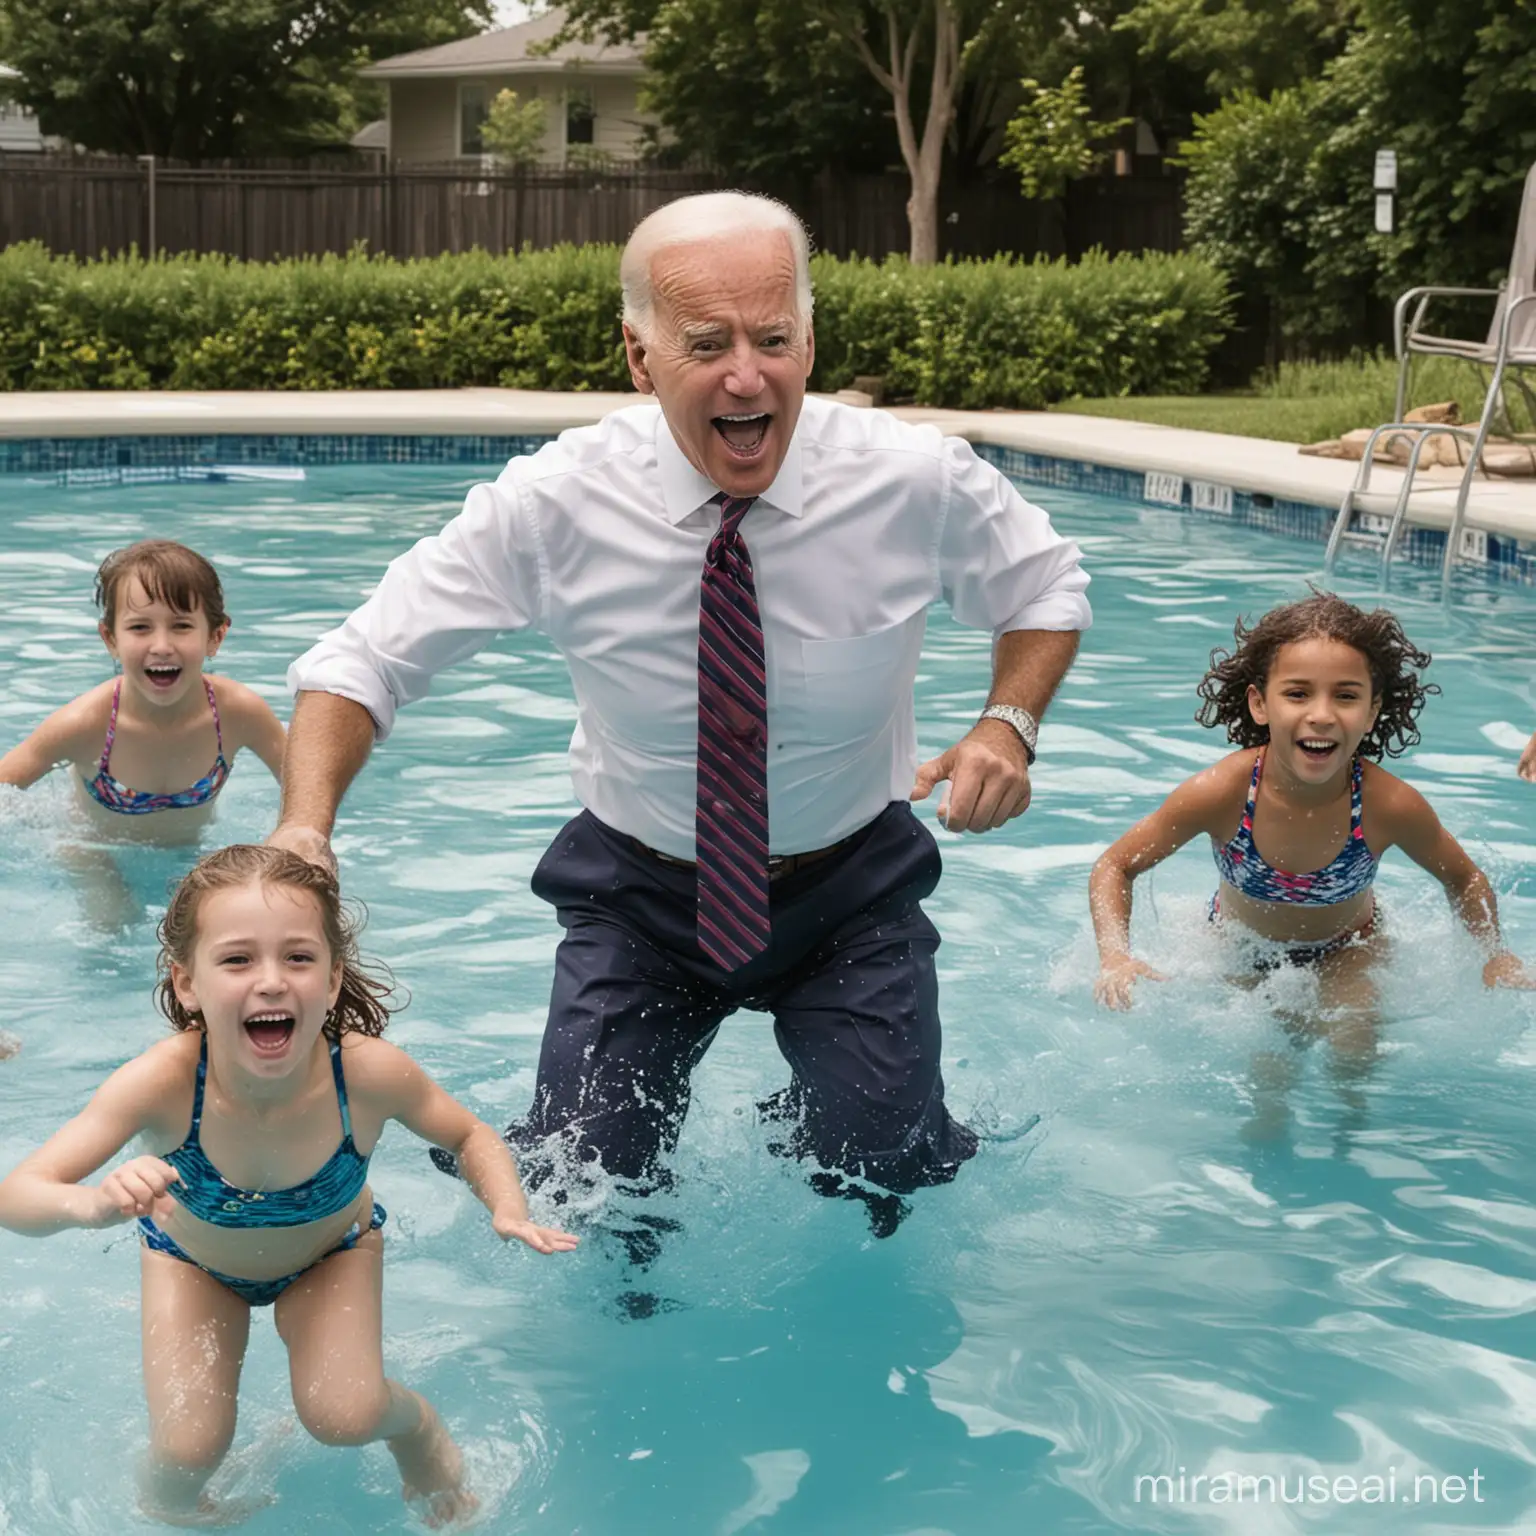 Joe Biden chasing children in a swiming pool